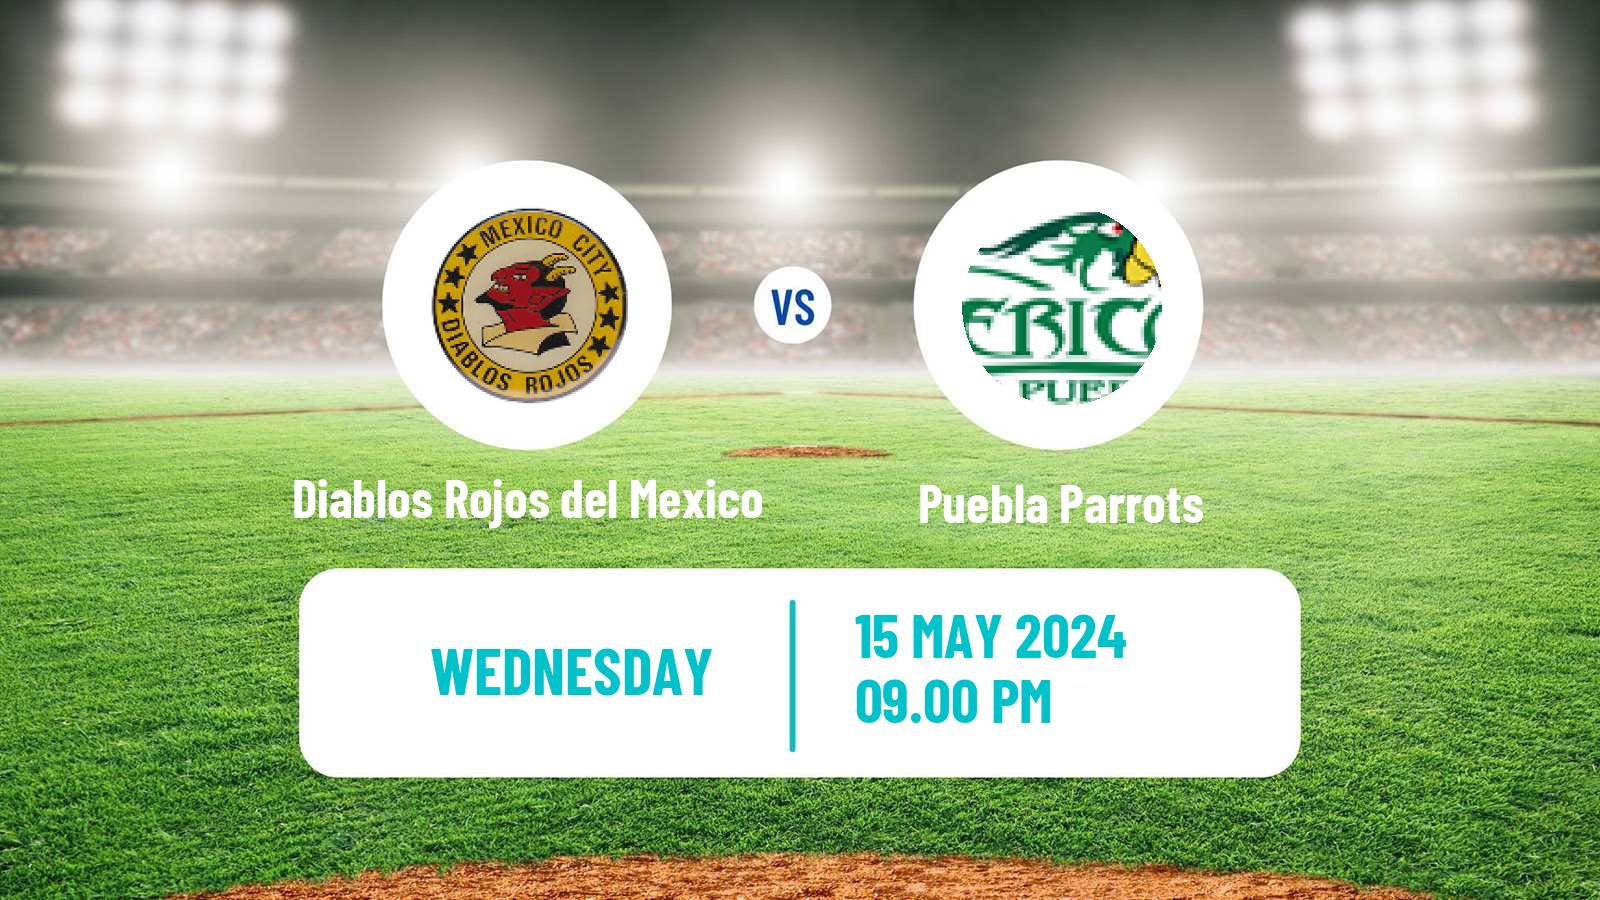 Baseball LMB Diablos Rojos del Mexico - Puebla Parrots